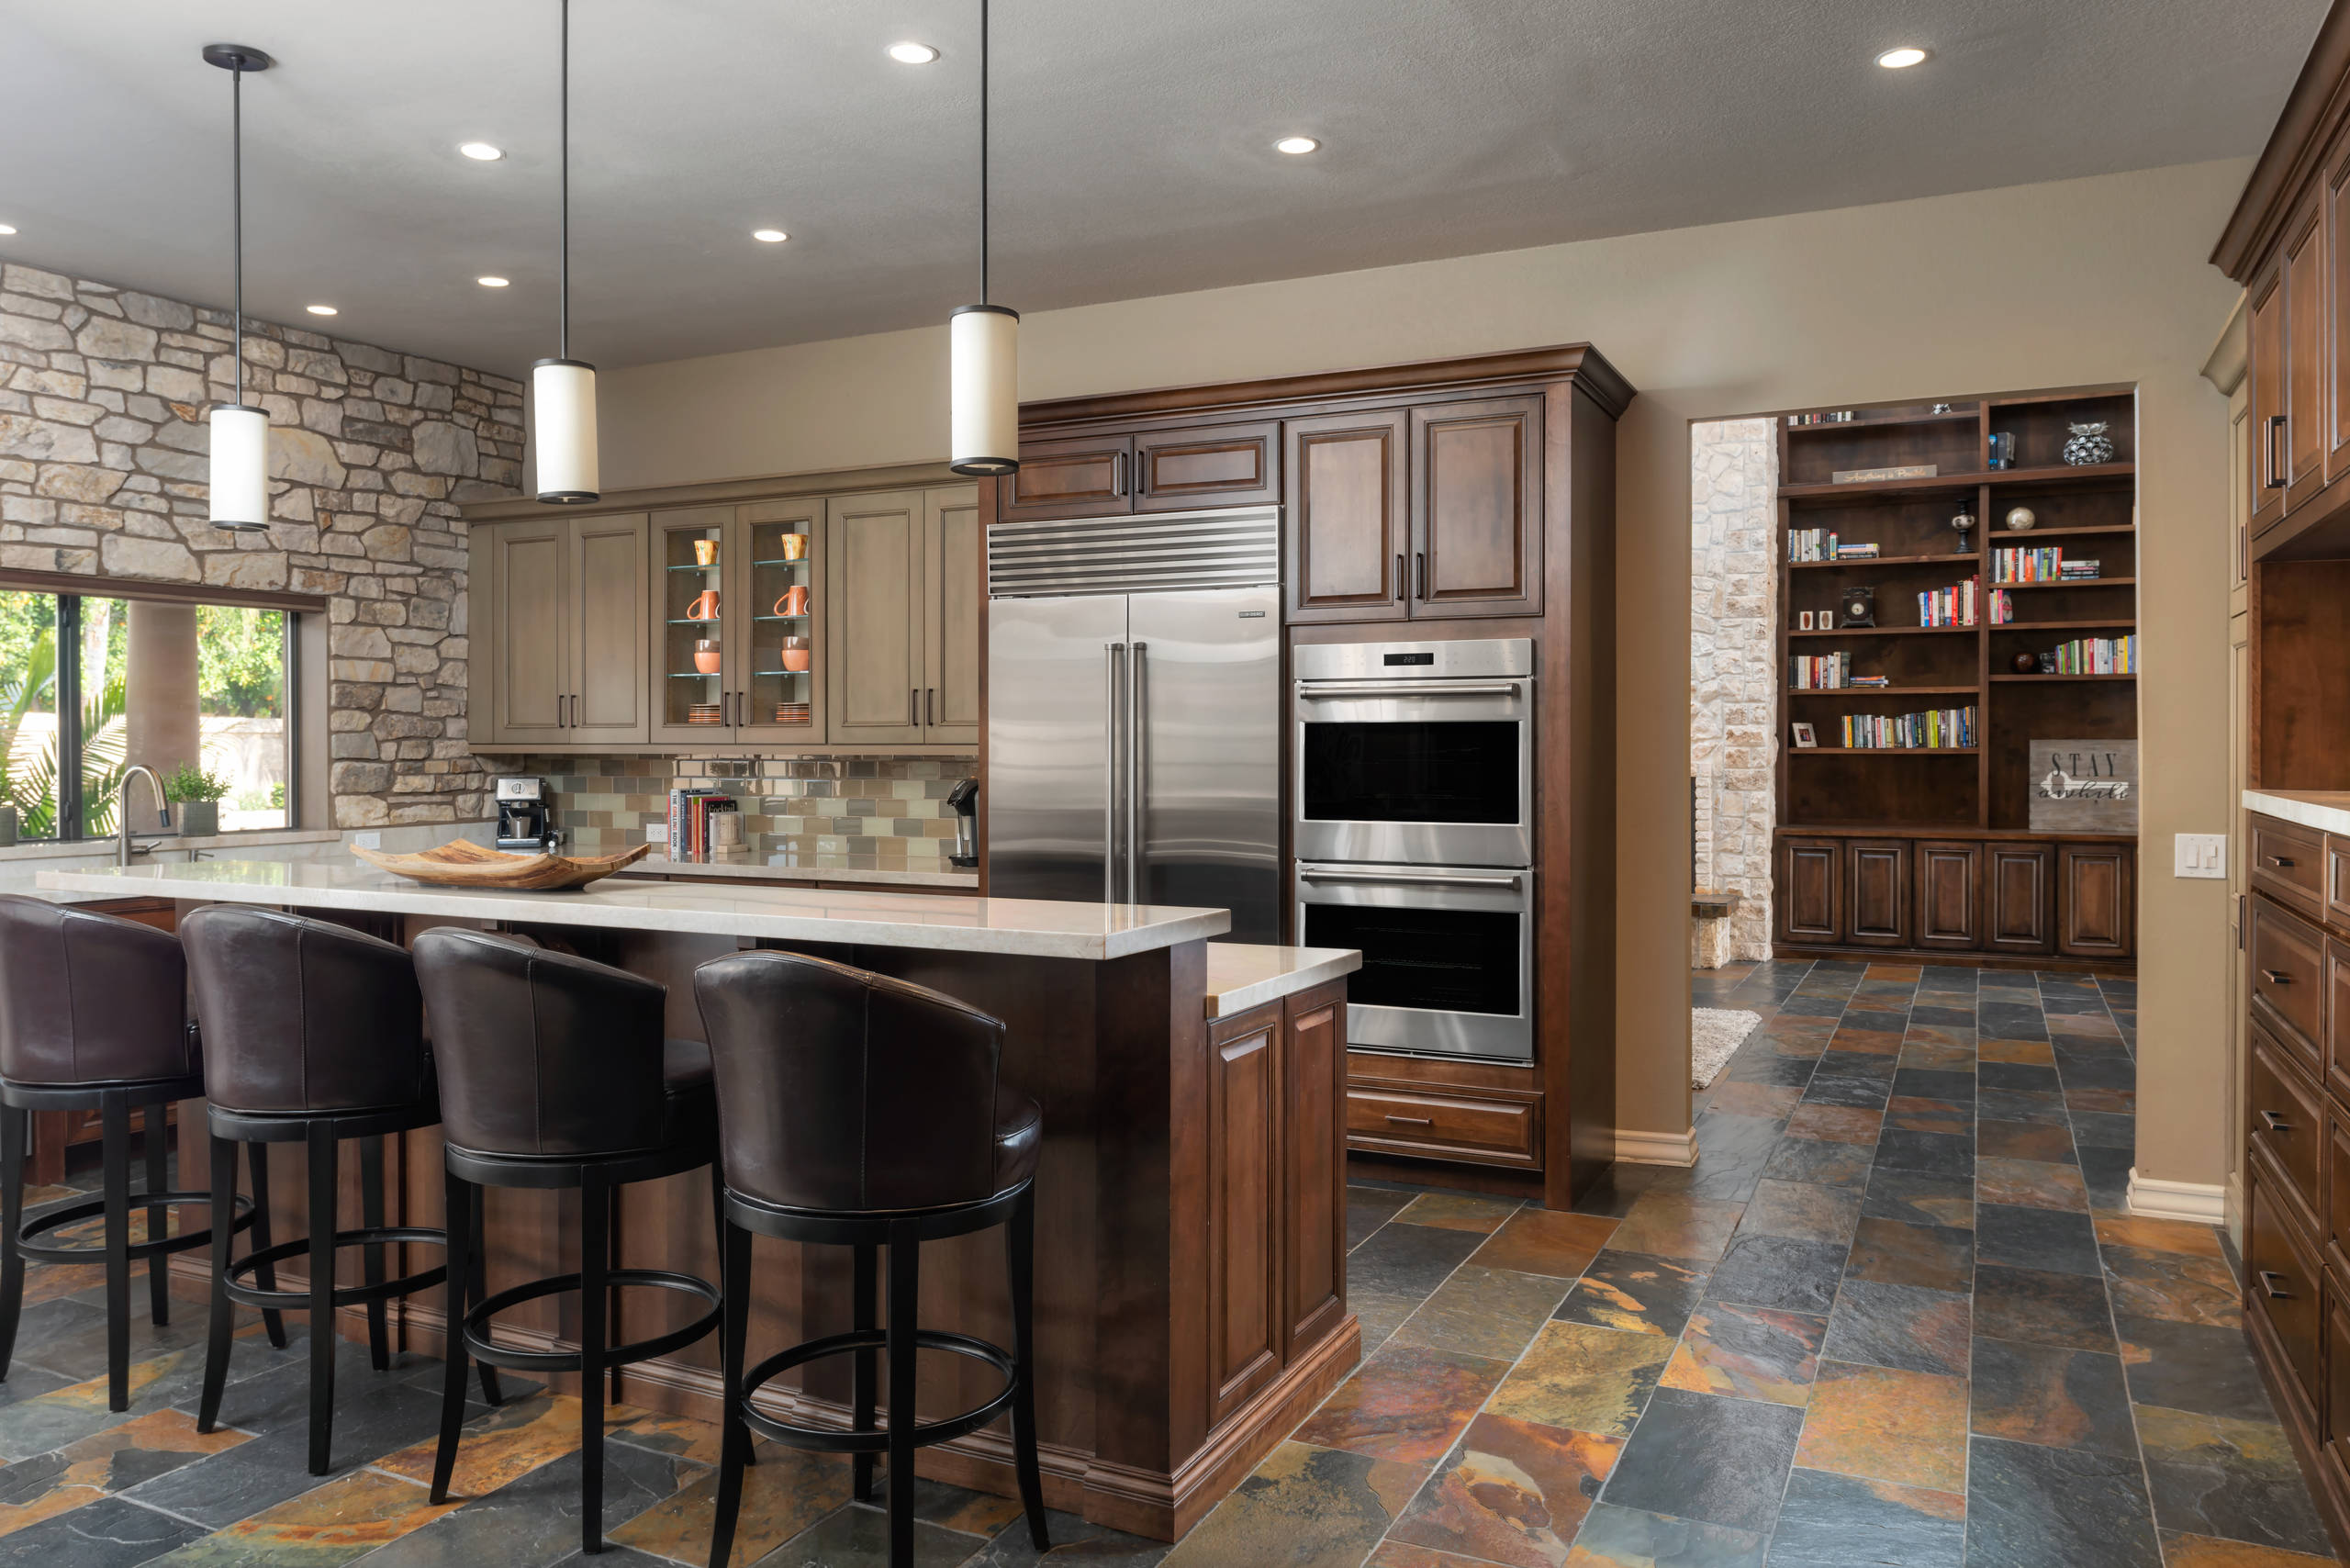 18 Kitchen with Dark Wood Cabinets and Subway Tile Backsplash ...